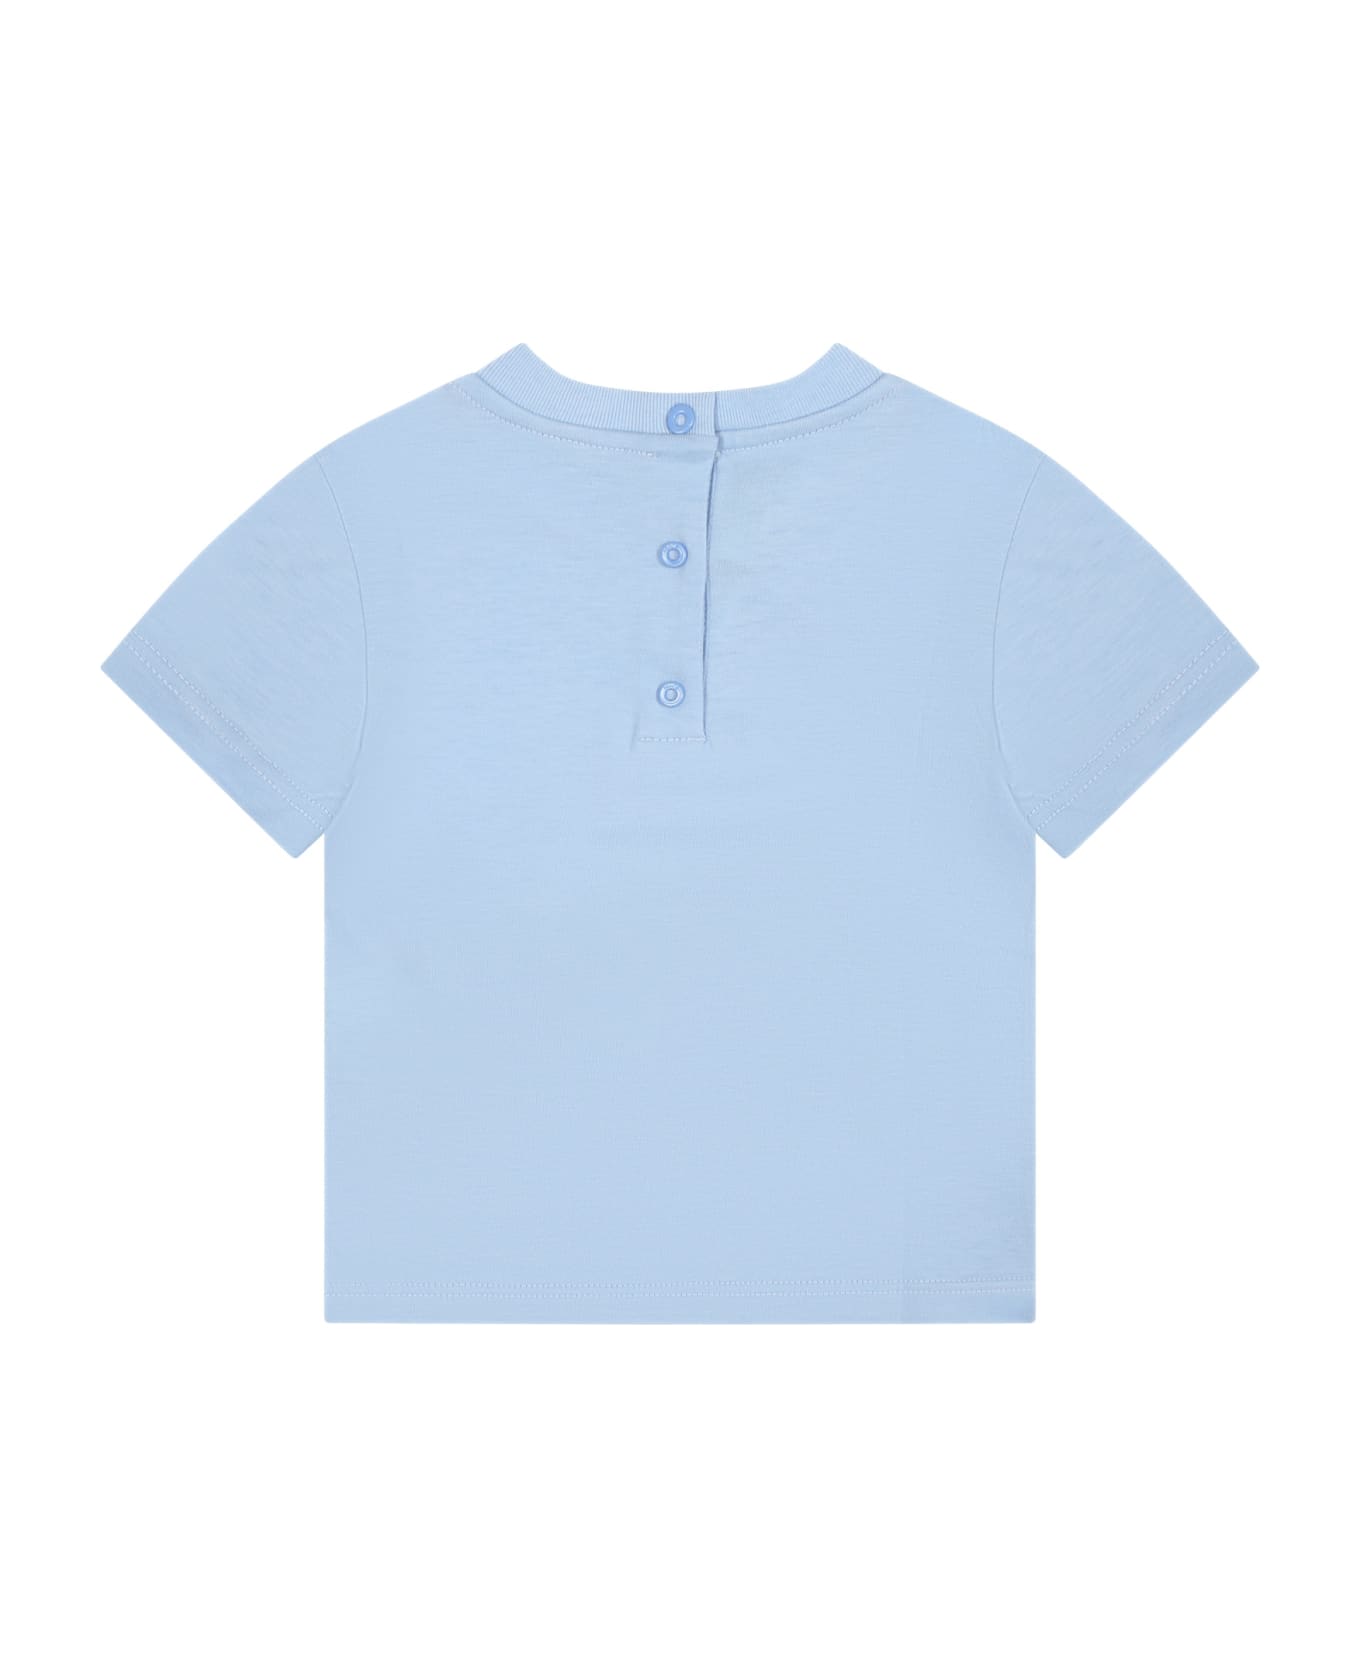 Fendi Light Blue T-shirt For Baby Boy With Ff - Light Blue